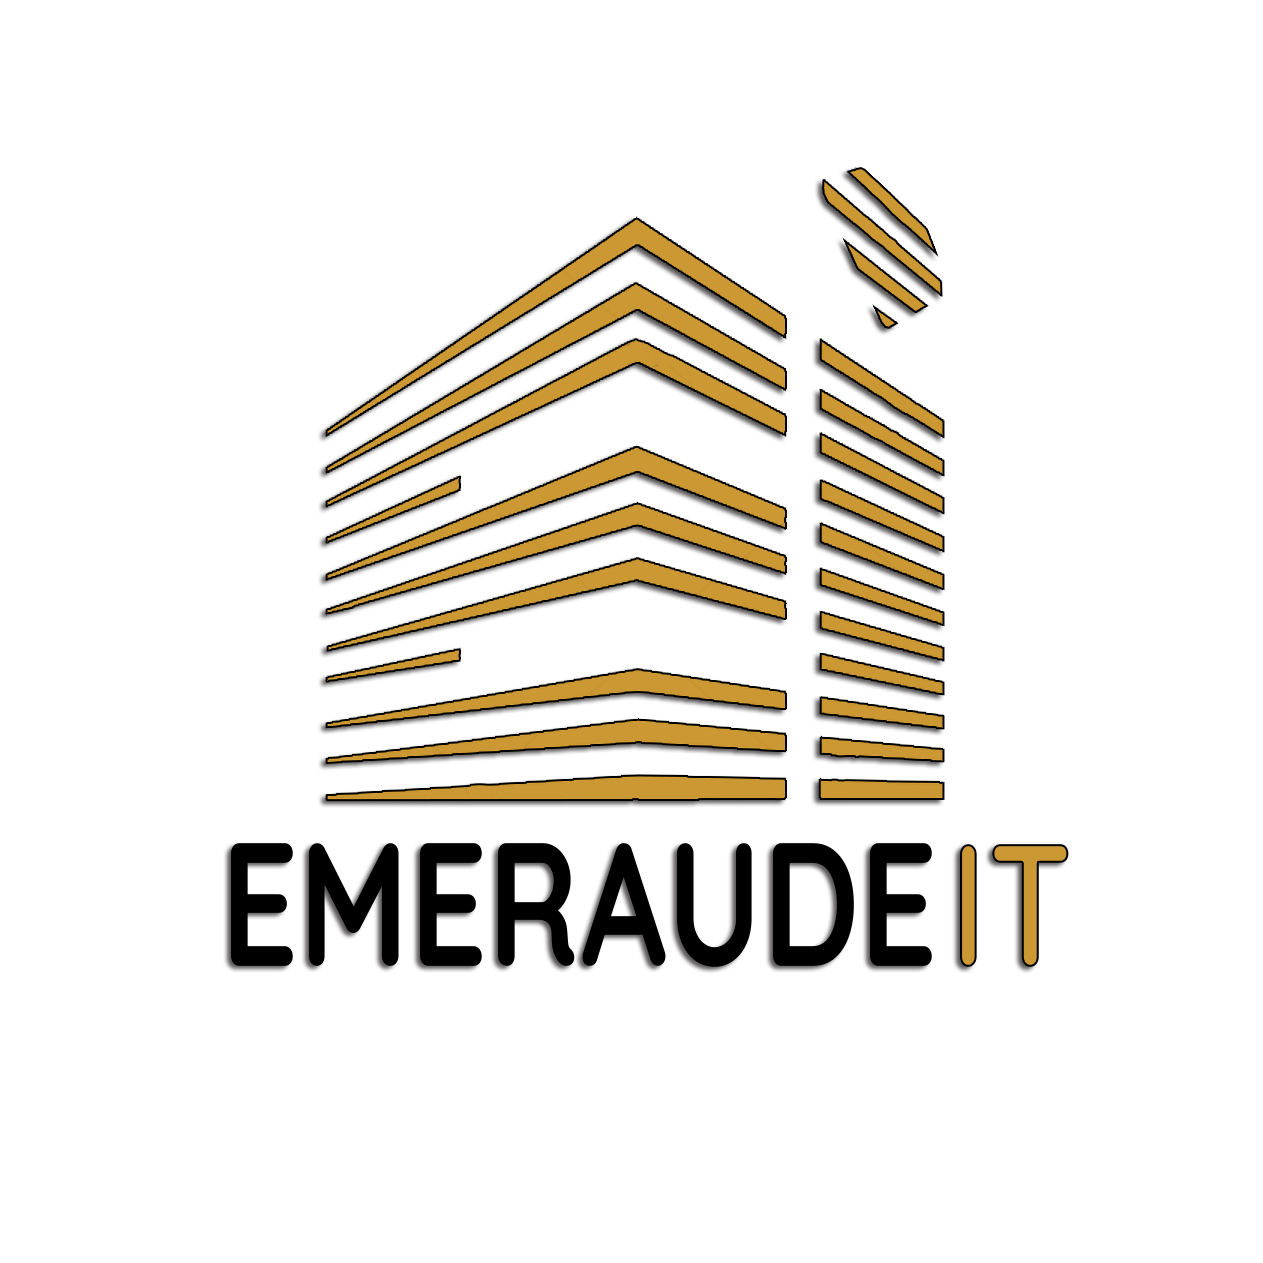 Emeraude IT logo